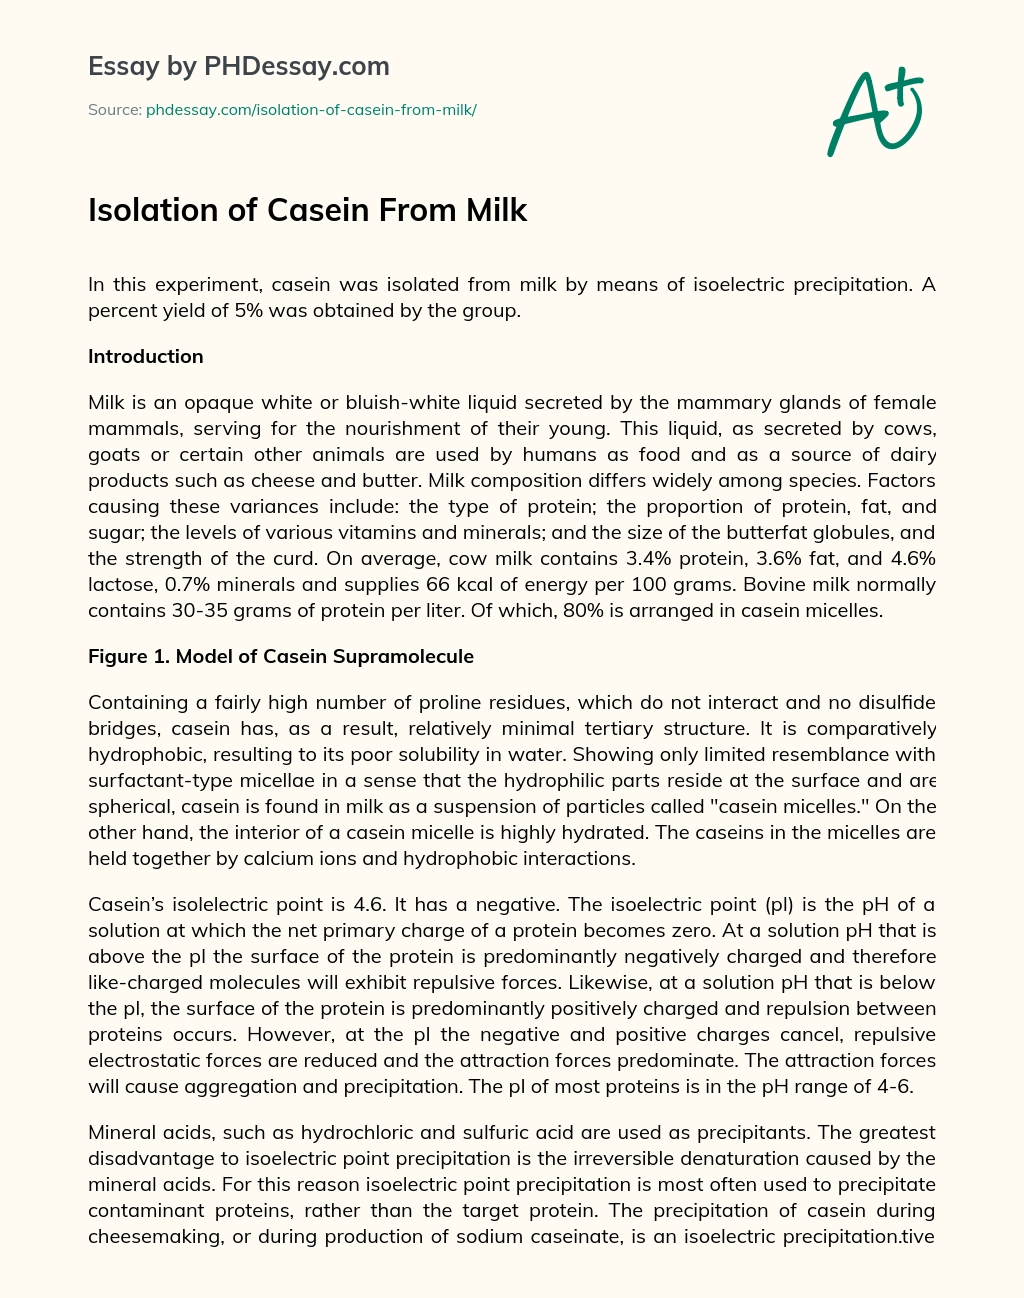 Isolation of Casein From Milk essay